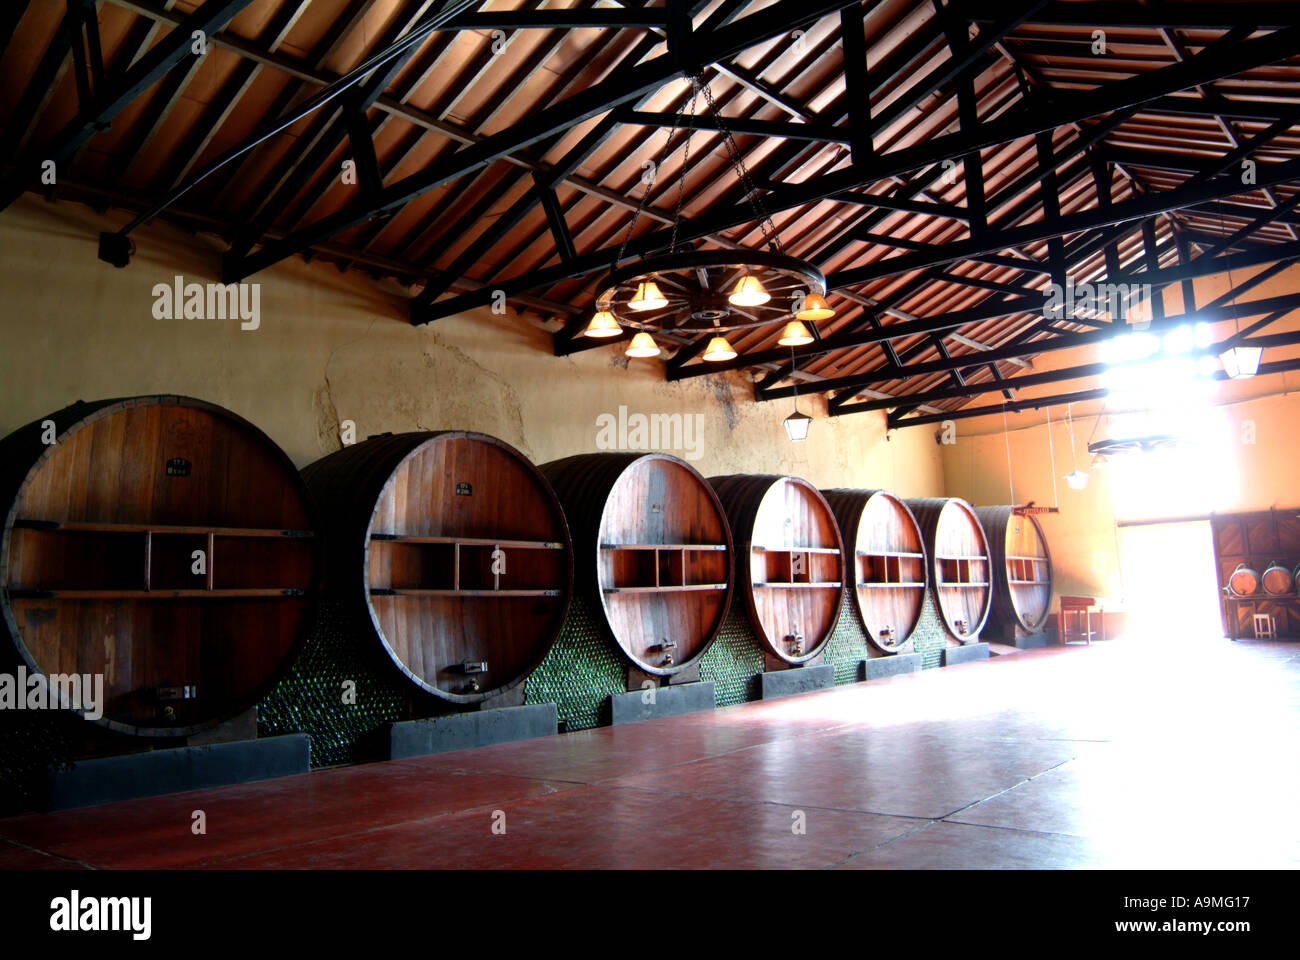 Winery wine barrel storage Mendoza Argentina Stock Photo